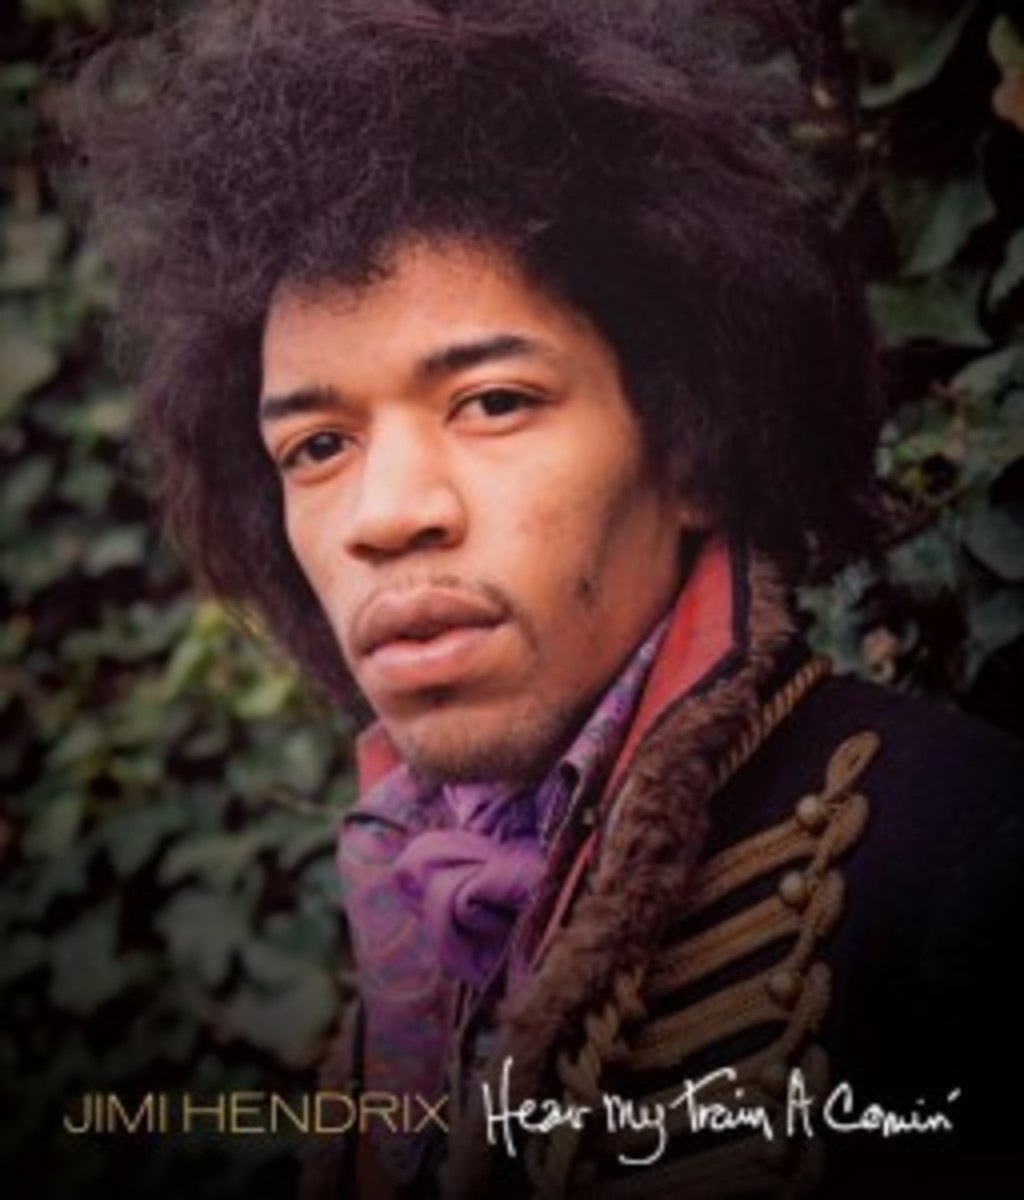 Hendrix - Hear My Train - DVD Super Jewel Cover